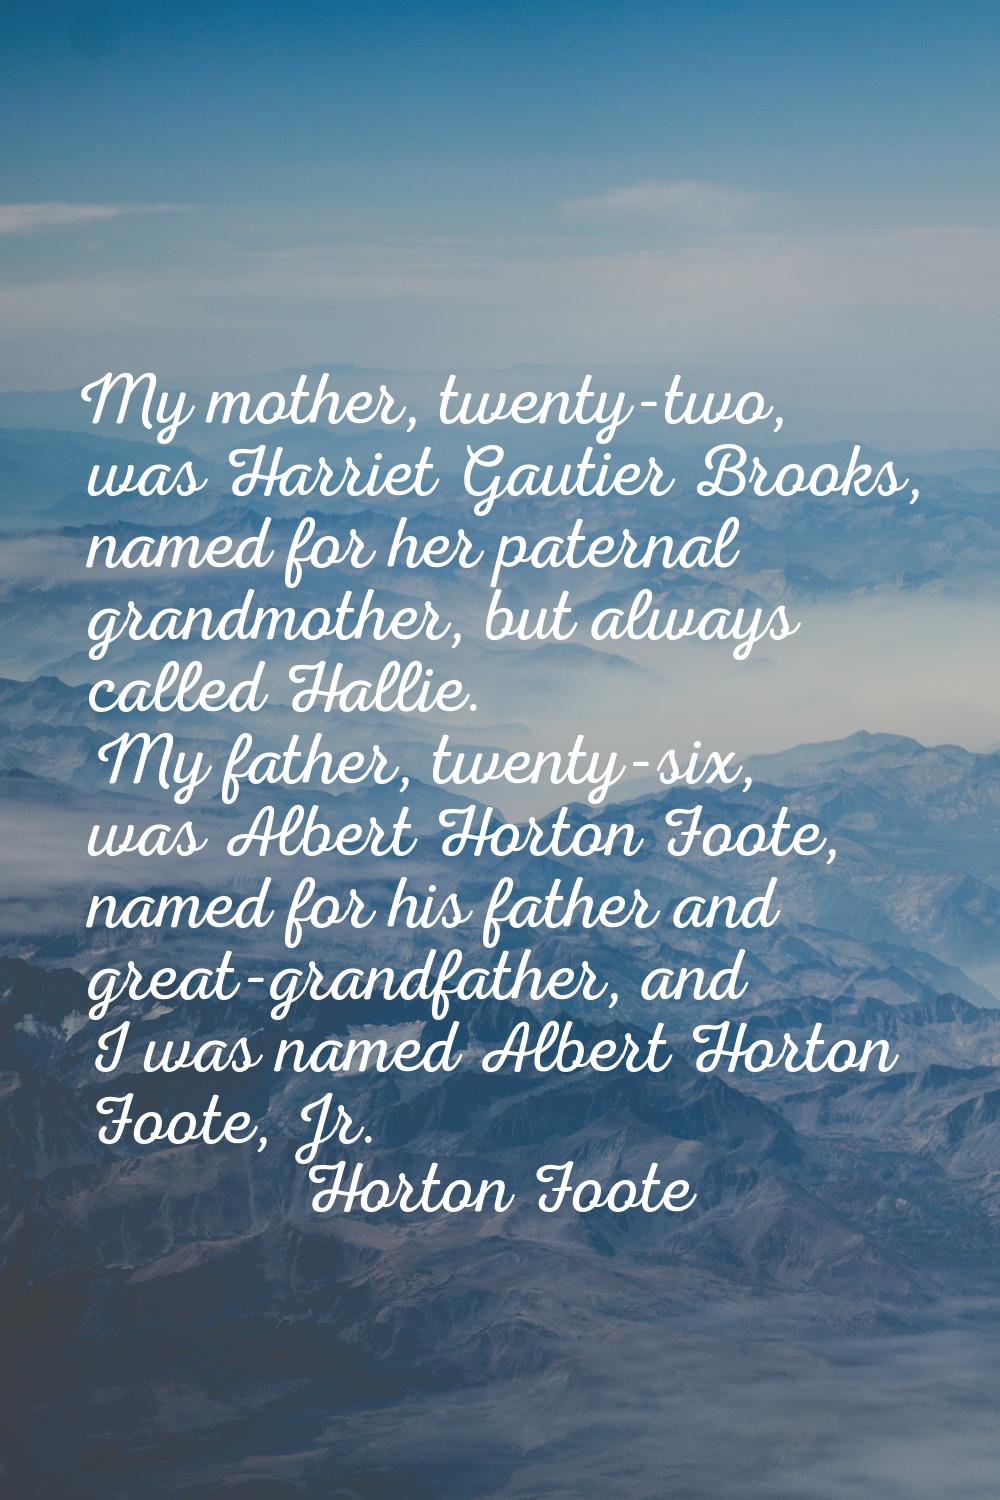 My mother, twenty-two, was Harriet Gautier Brooks, named for her paternal grandmother, but always c